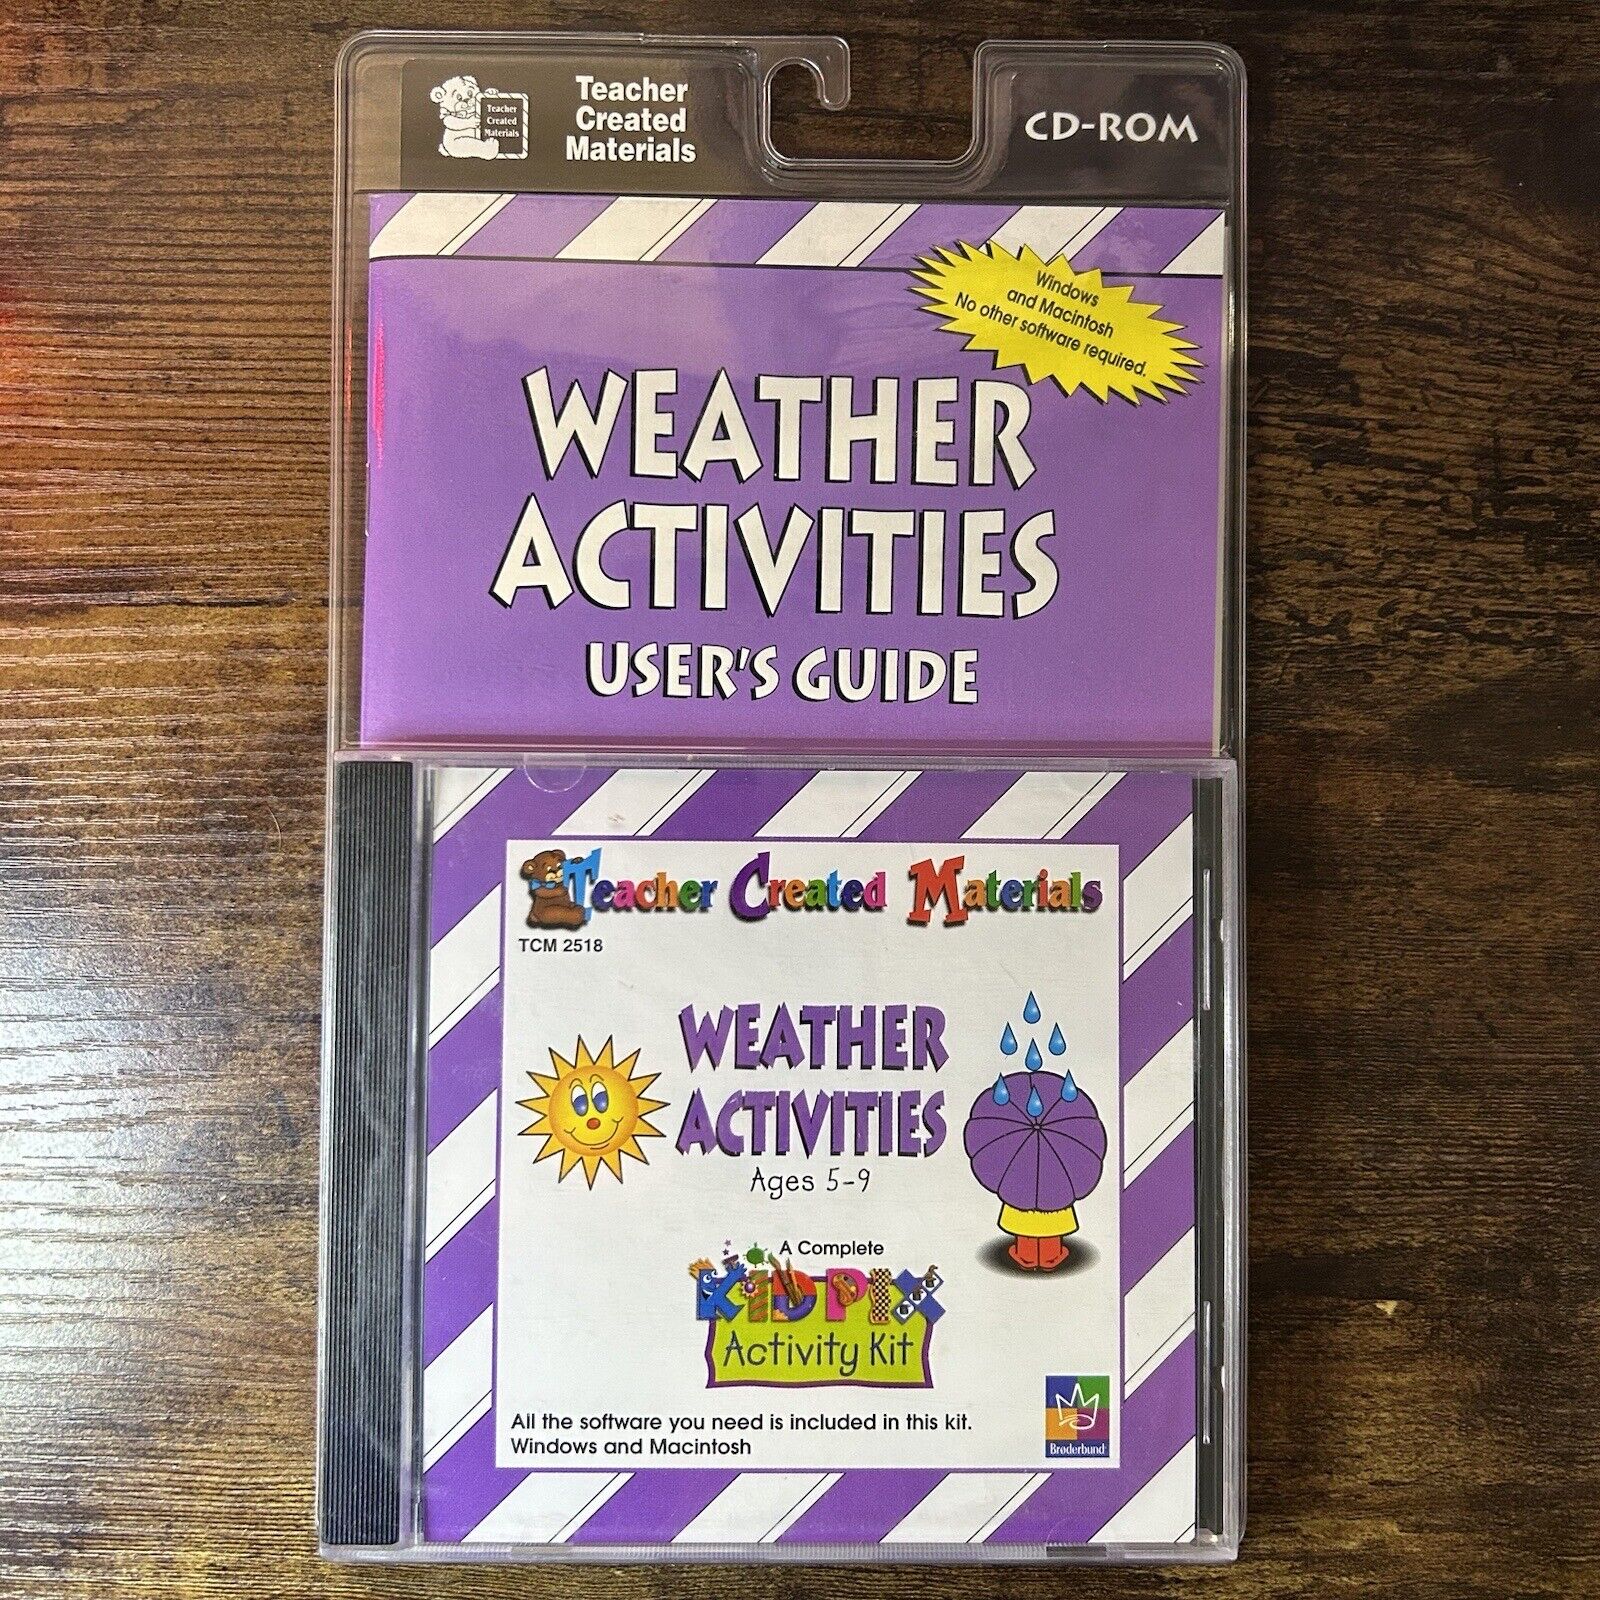 Weather Activities New CD Rom Teacher Created Materials Kid Pix Activity Kit